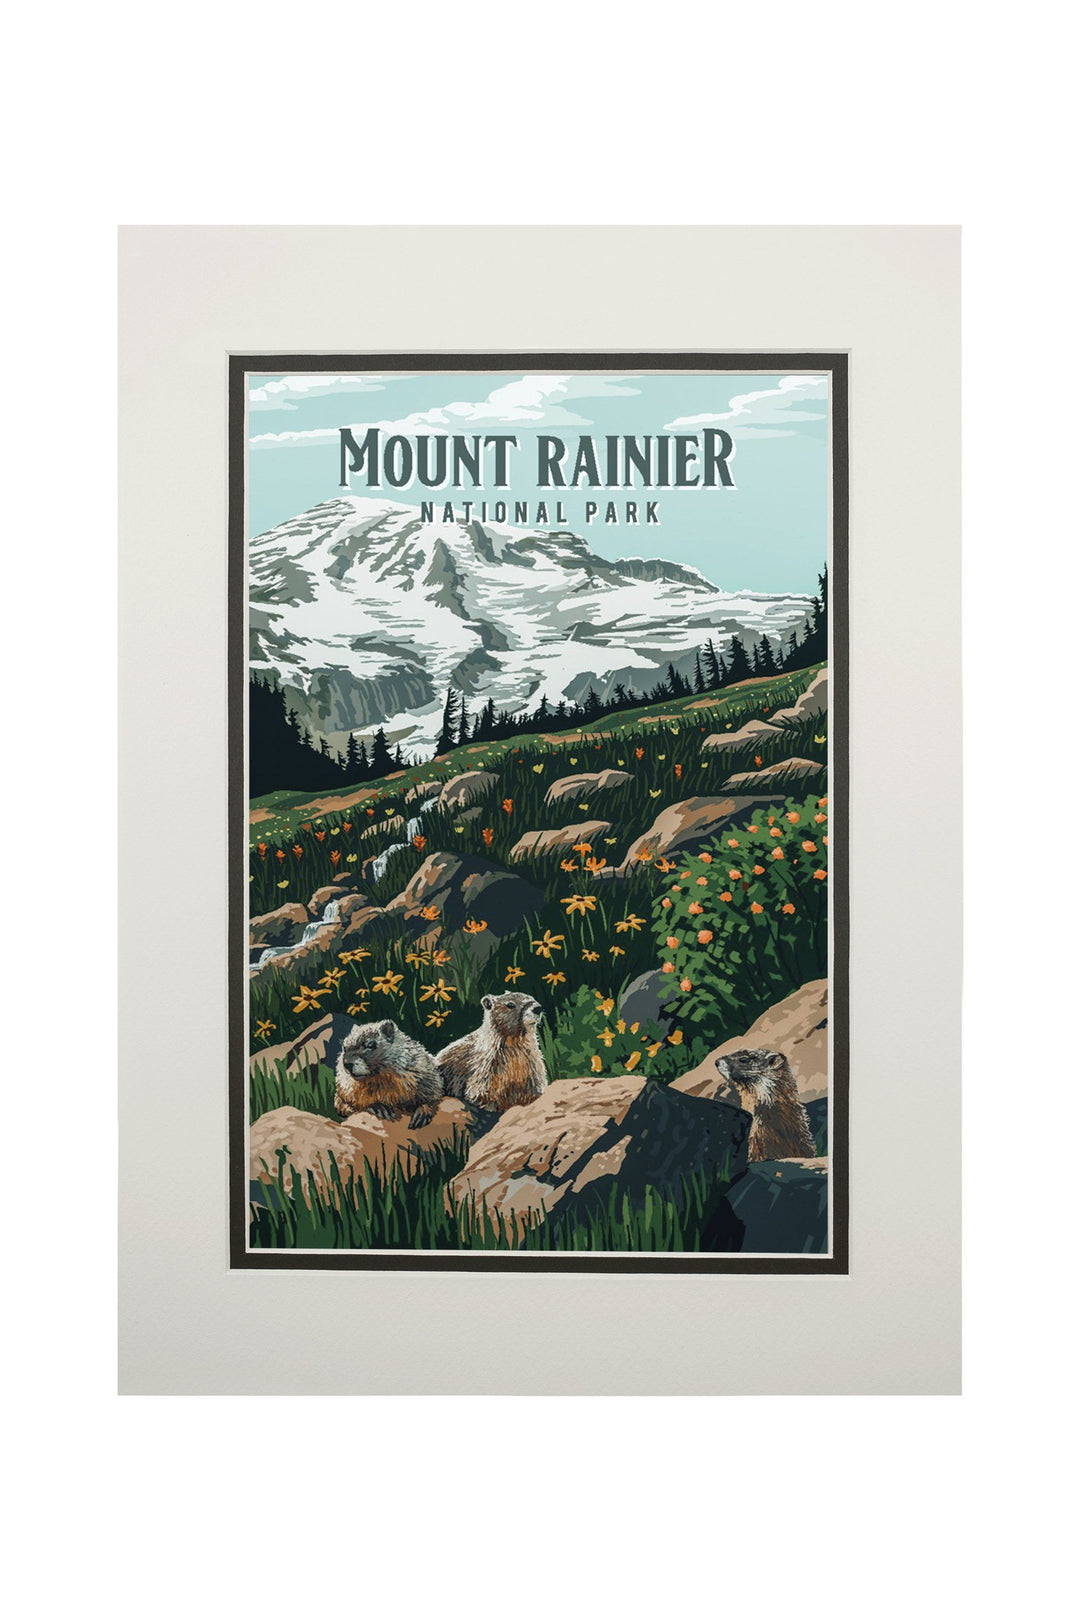 Mount Rainier National Park, Washington, Painterly National Park Series, Art Prints and Metal Signs Art Lantern Press 11 x 14 Matted Art Print 